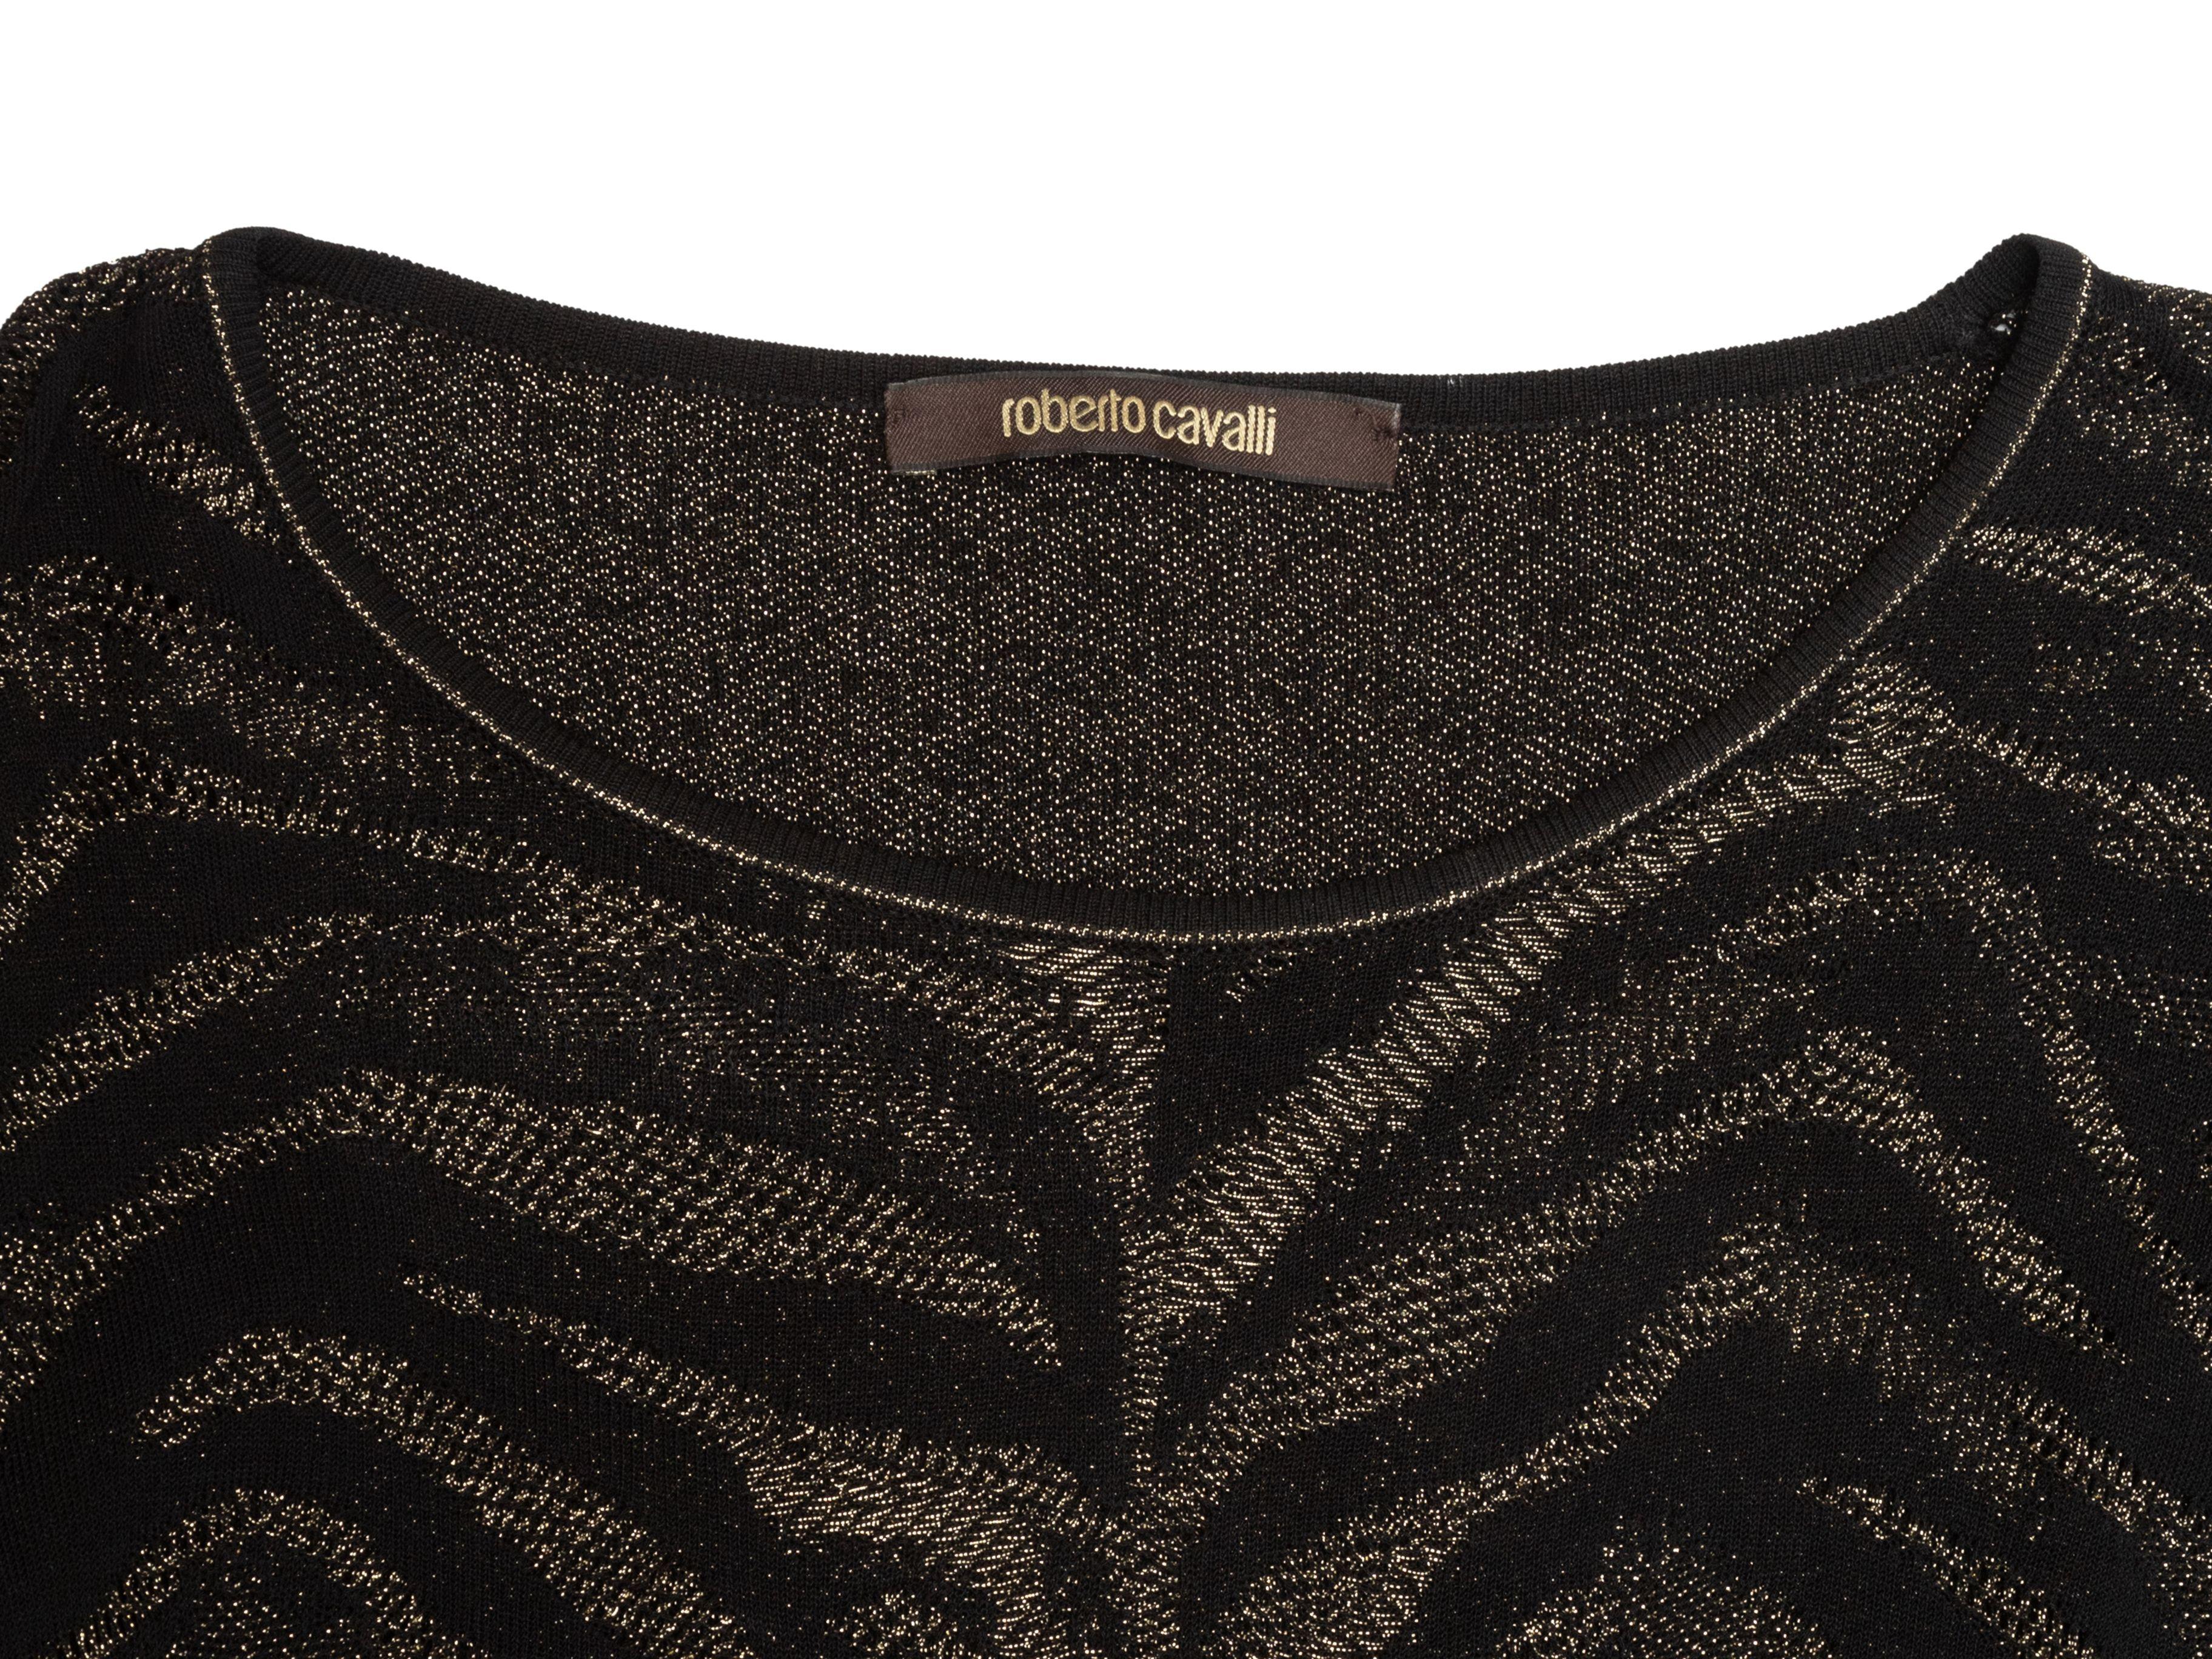 Roberto Cavalli Black & Gold Metallic Knit Tiger Patterned Dress For Sale 3